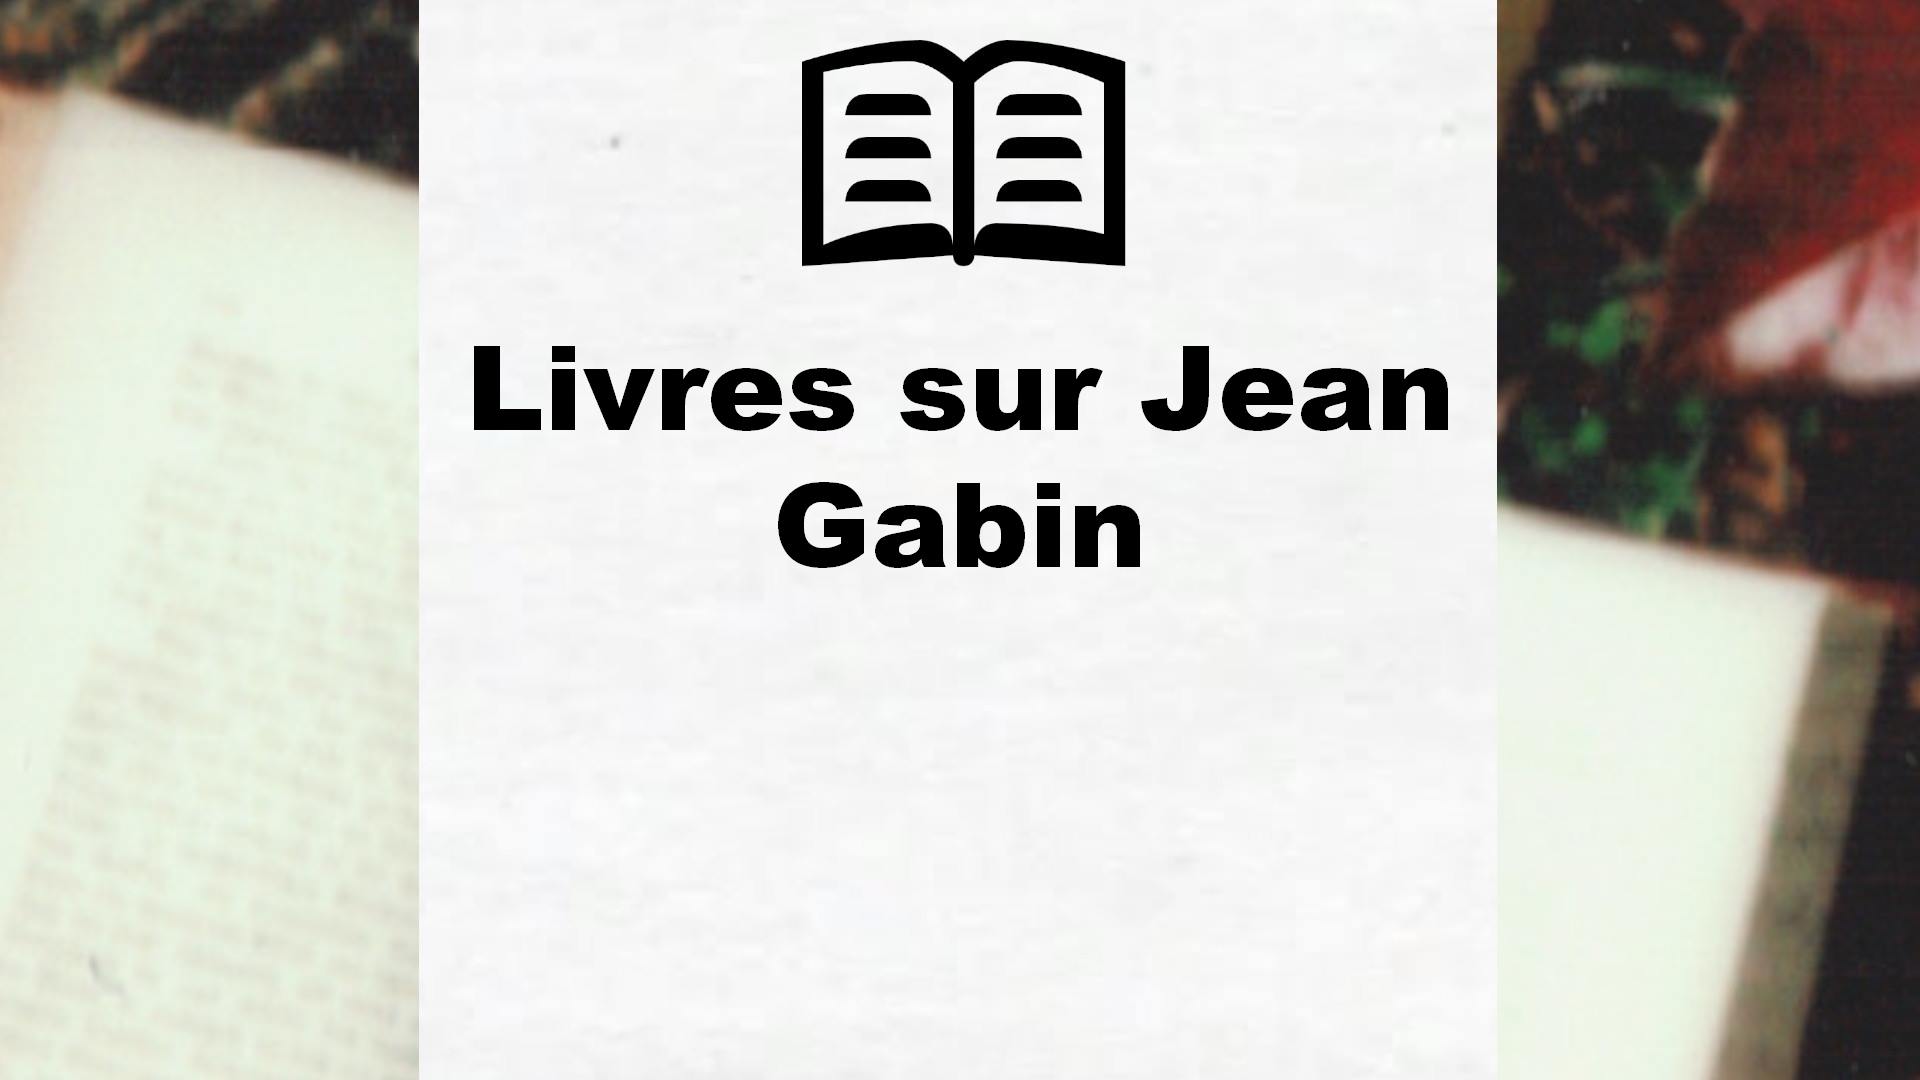 Livres sur Jean Gabin